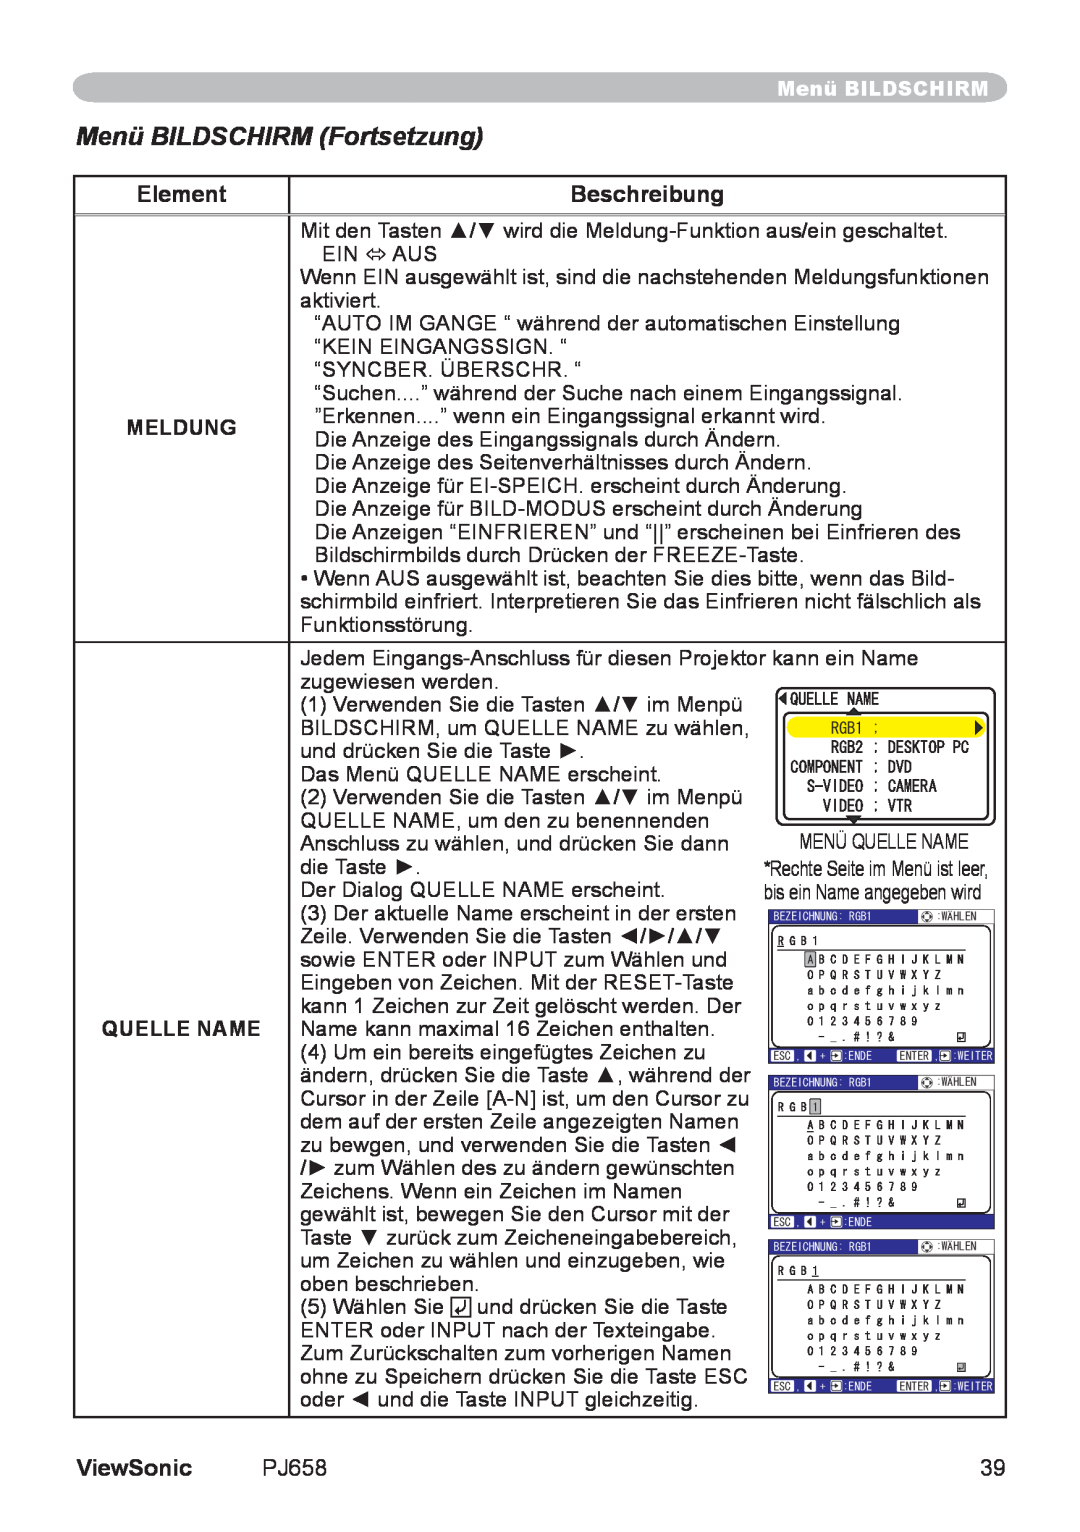 ViewSonic VS11361 manual Menü BILDSCHIRM Fortsetzung, Element, Beschreibung, ViewSonic 